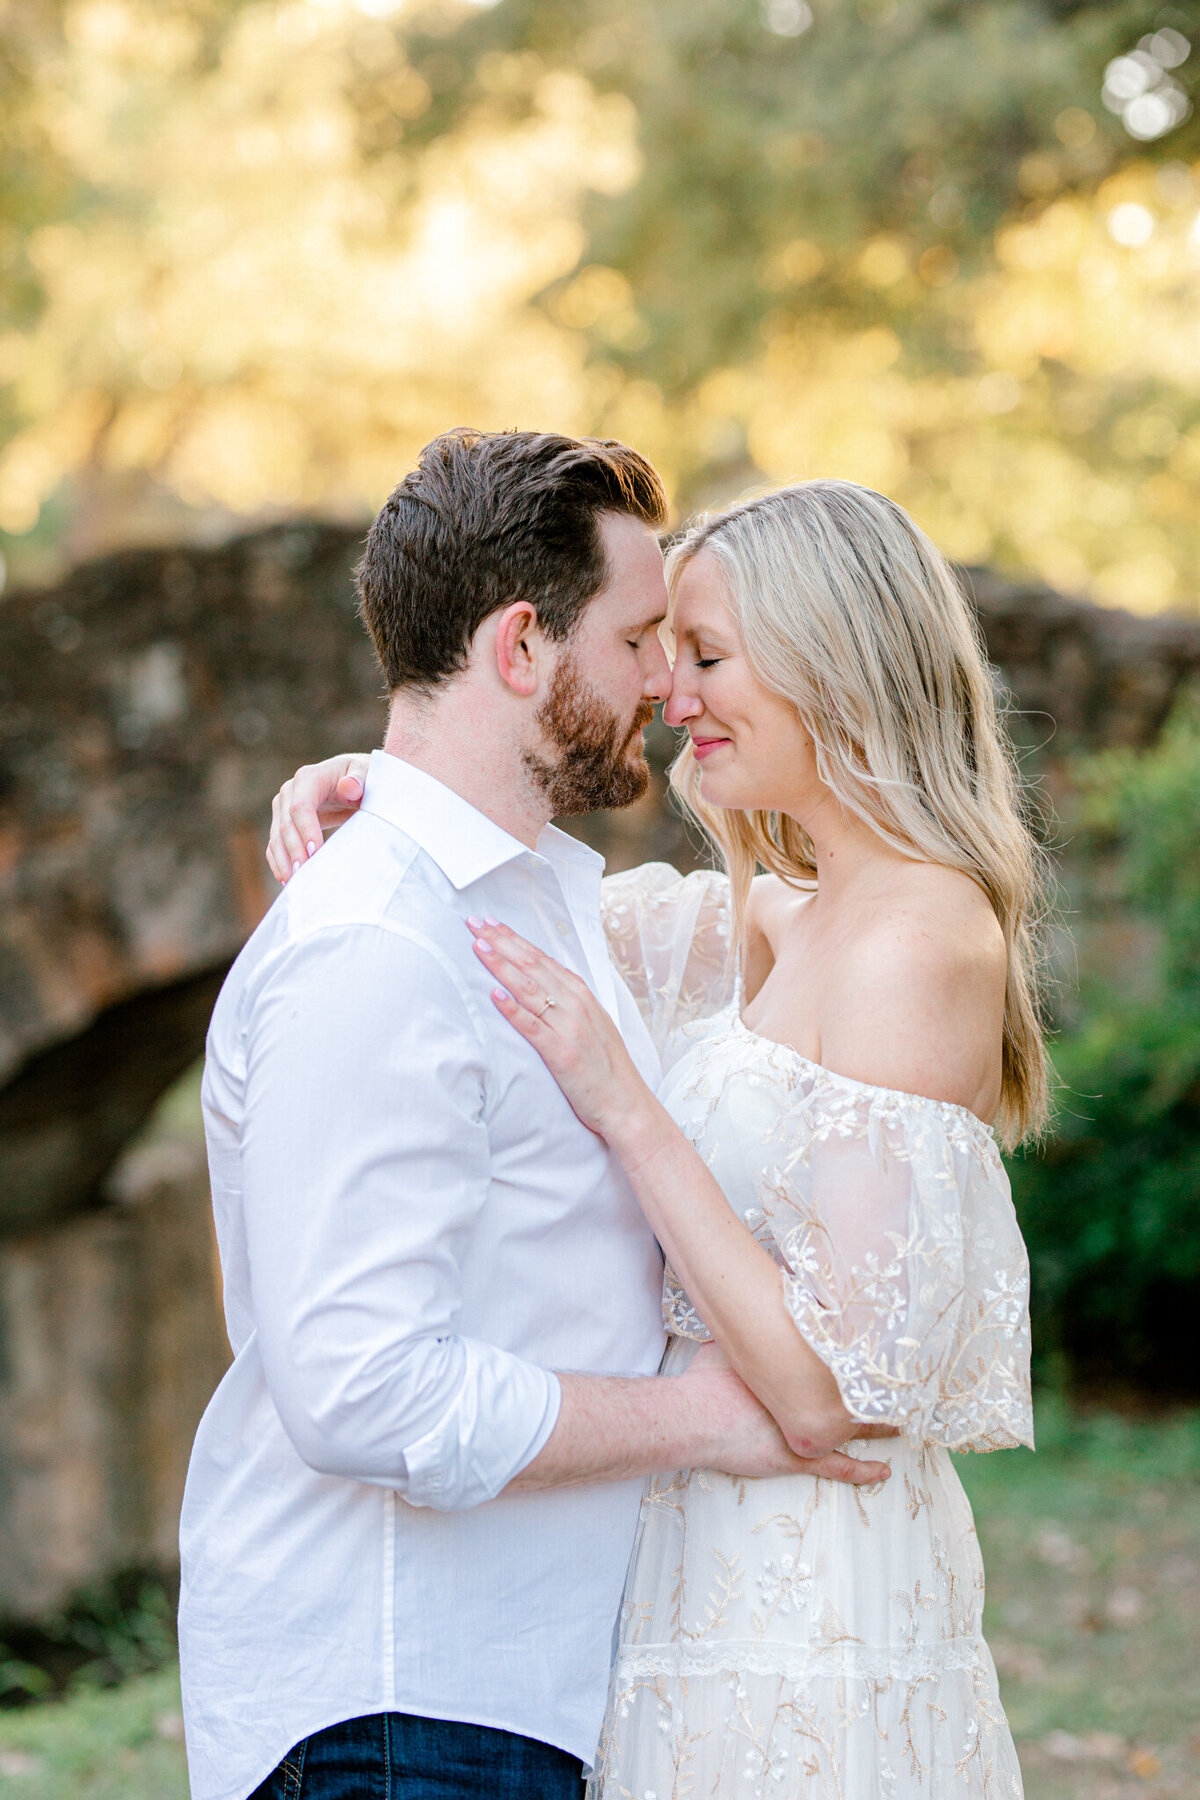 Jessica & Blake Engagement Session at Reverchon Park | Dallas Wedding Photographer-5